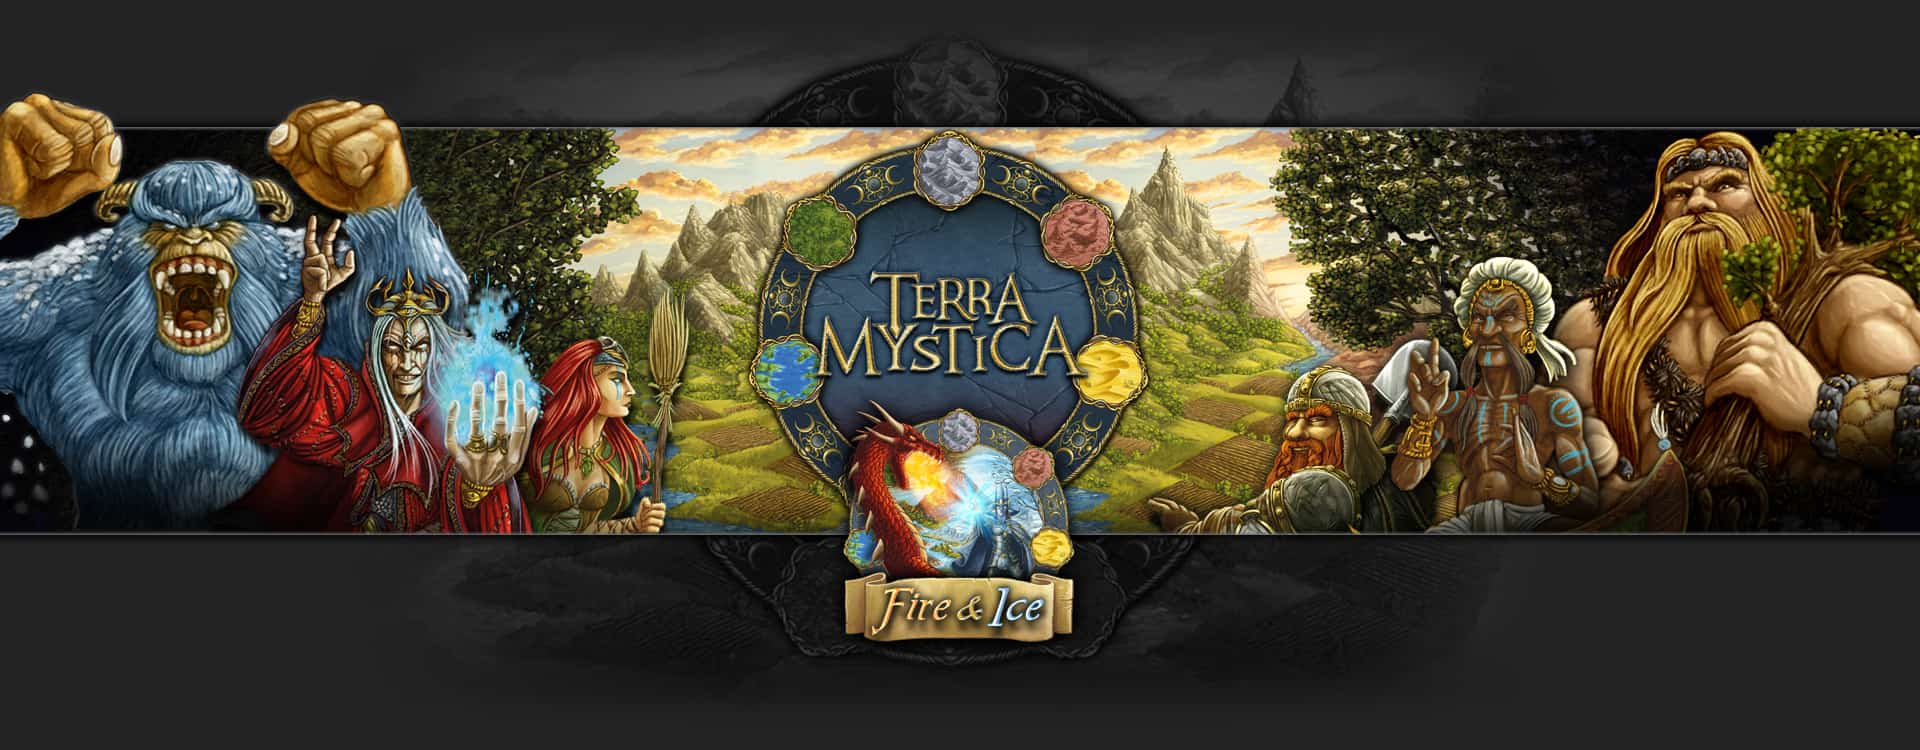 Header image of the board game Terra Mystica 